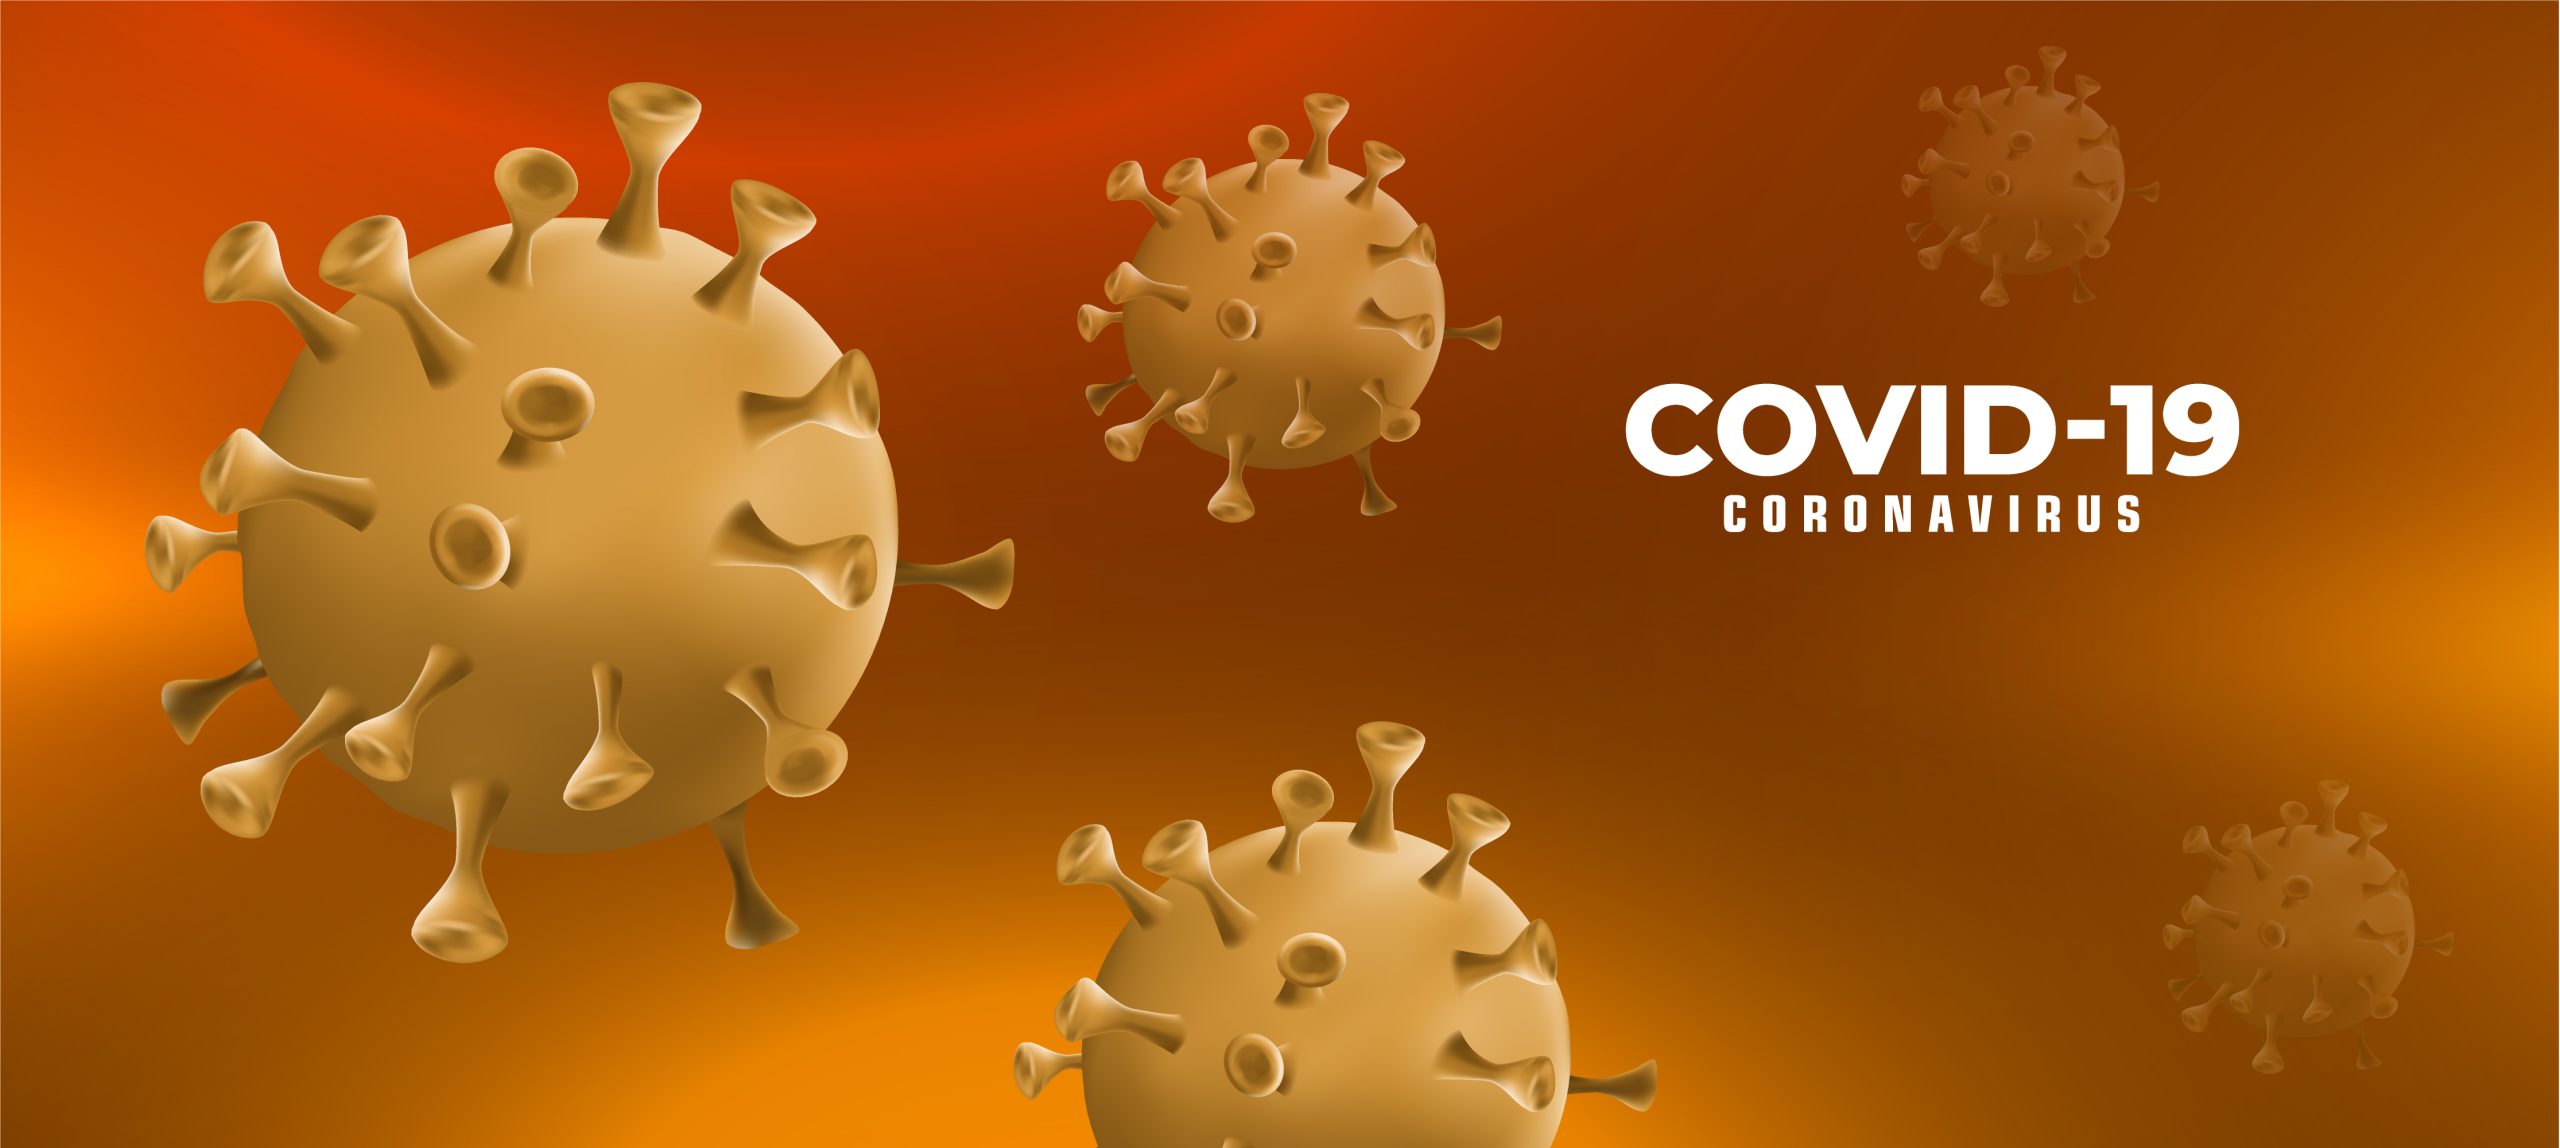 Coronavirus Background Templates - 2